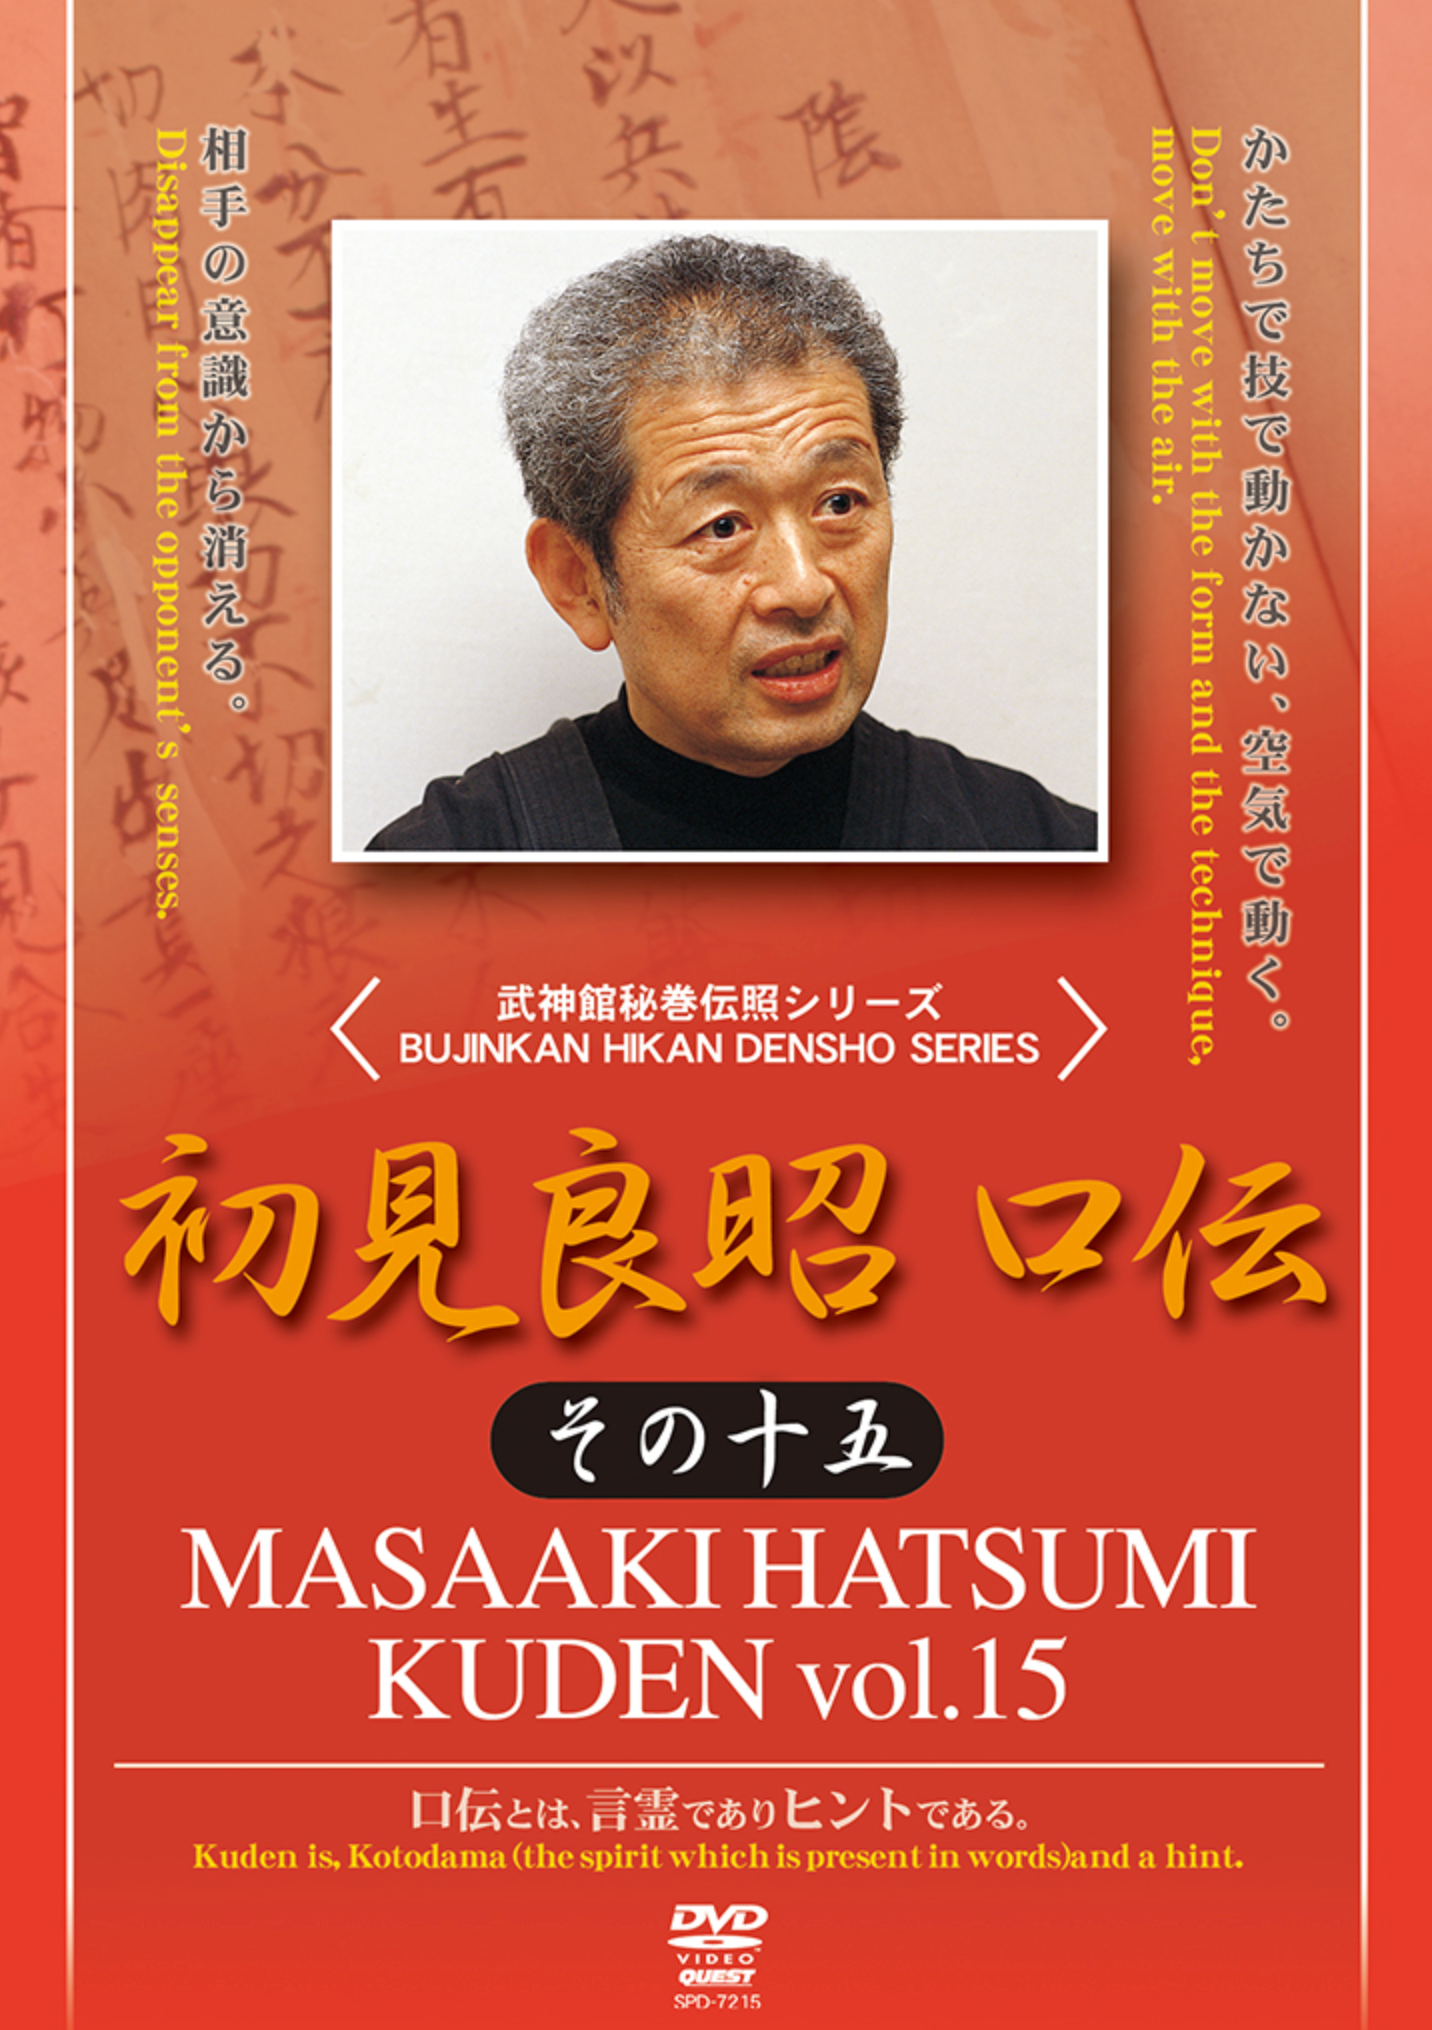 Kuden Vol 15 DVD with Masaaki Hatsumi - Budovideos Inc